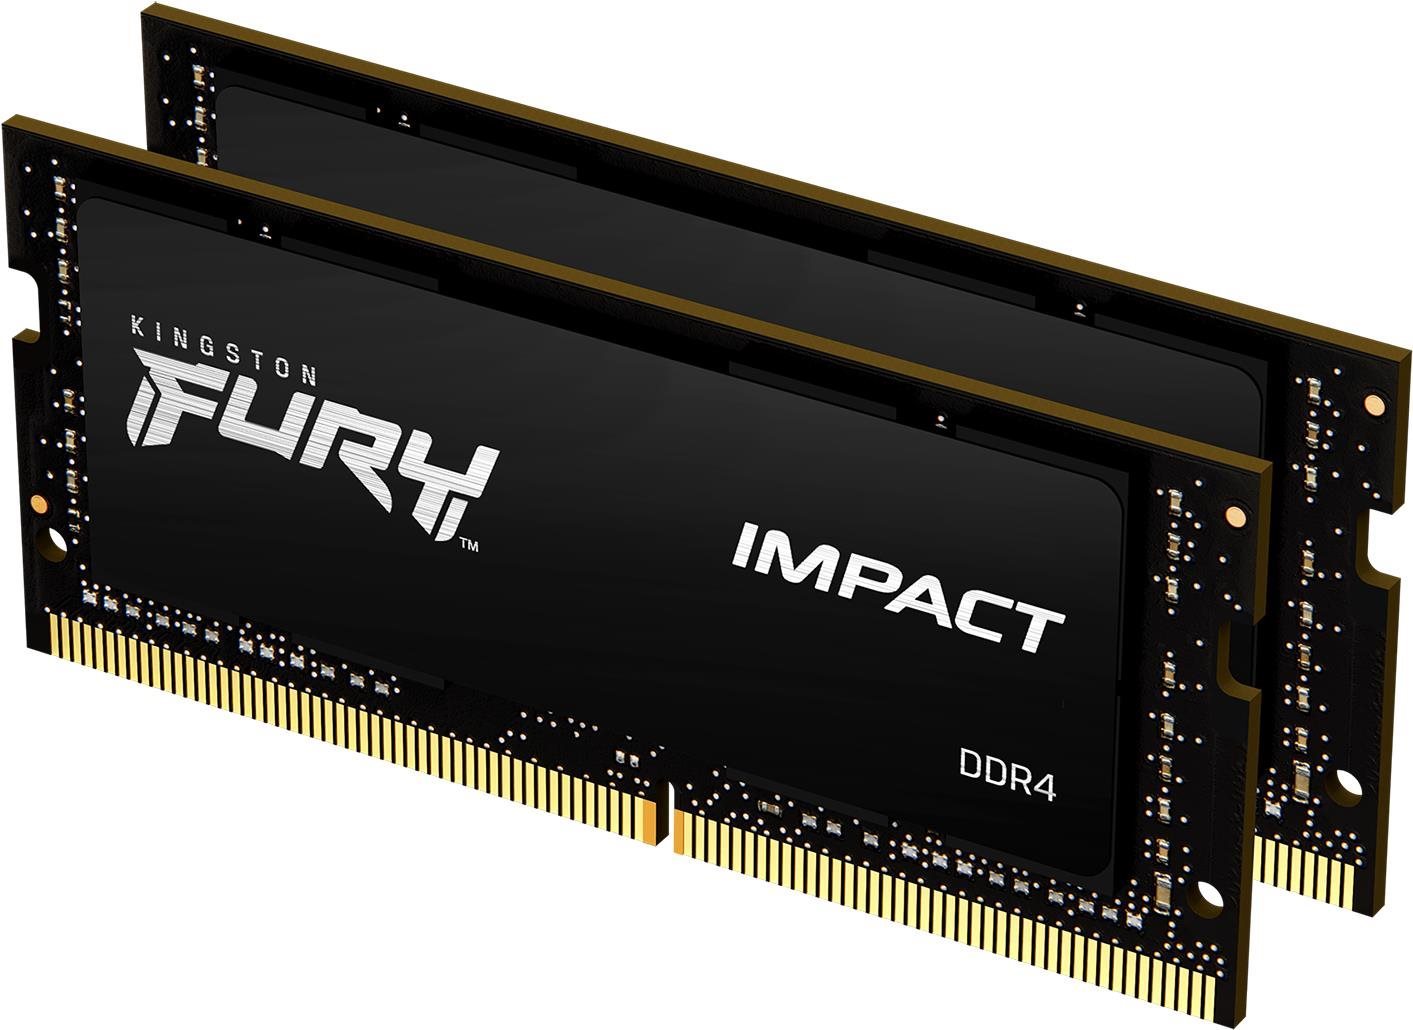 RAM memória Kingston FURY SO-DIMM 64GB KIT DDR4 2666MHz CL16 Impact